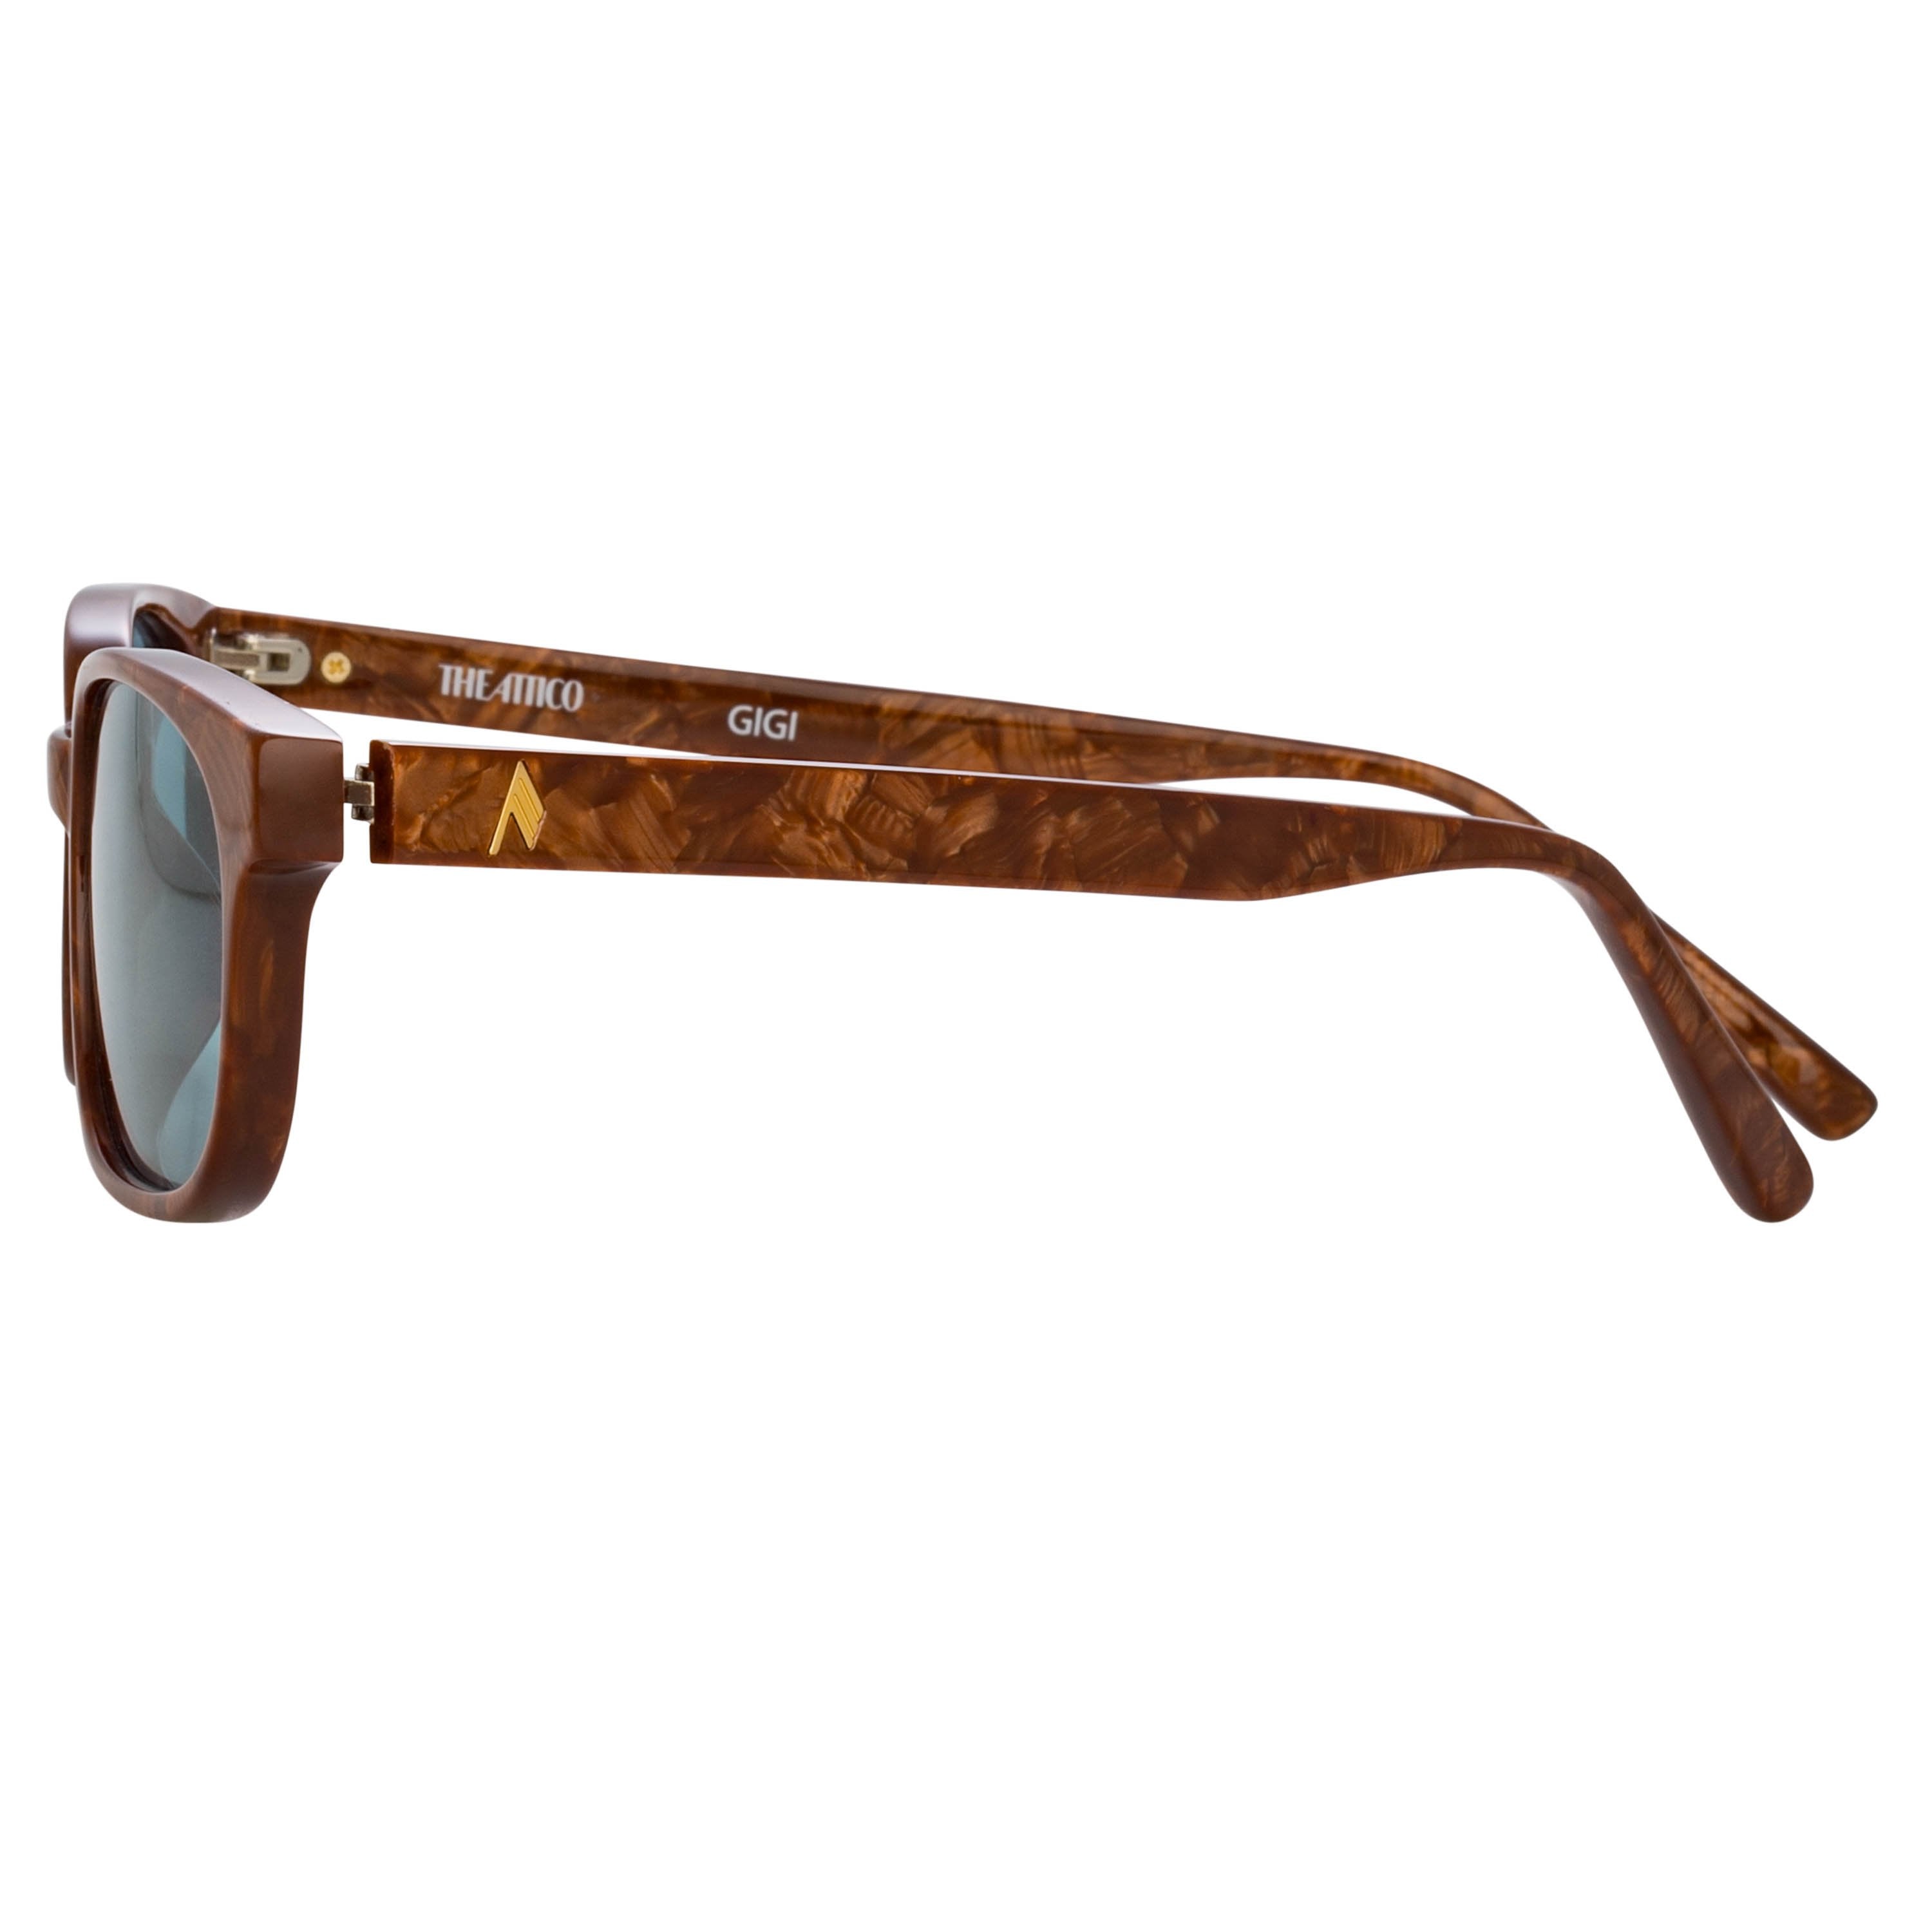 Color_ATTICO9C3SUN - The Attico Gigi Rectangular Sunglasses in Brown and Turquoise